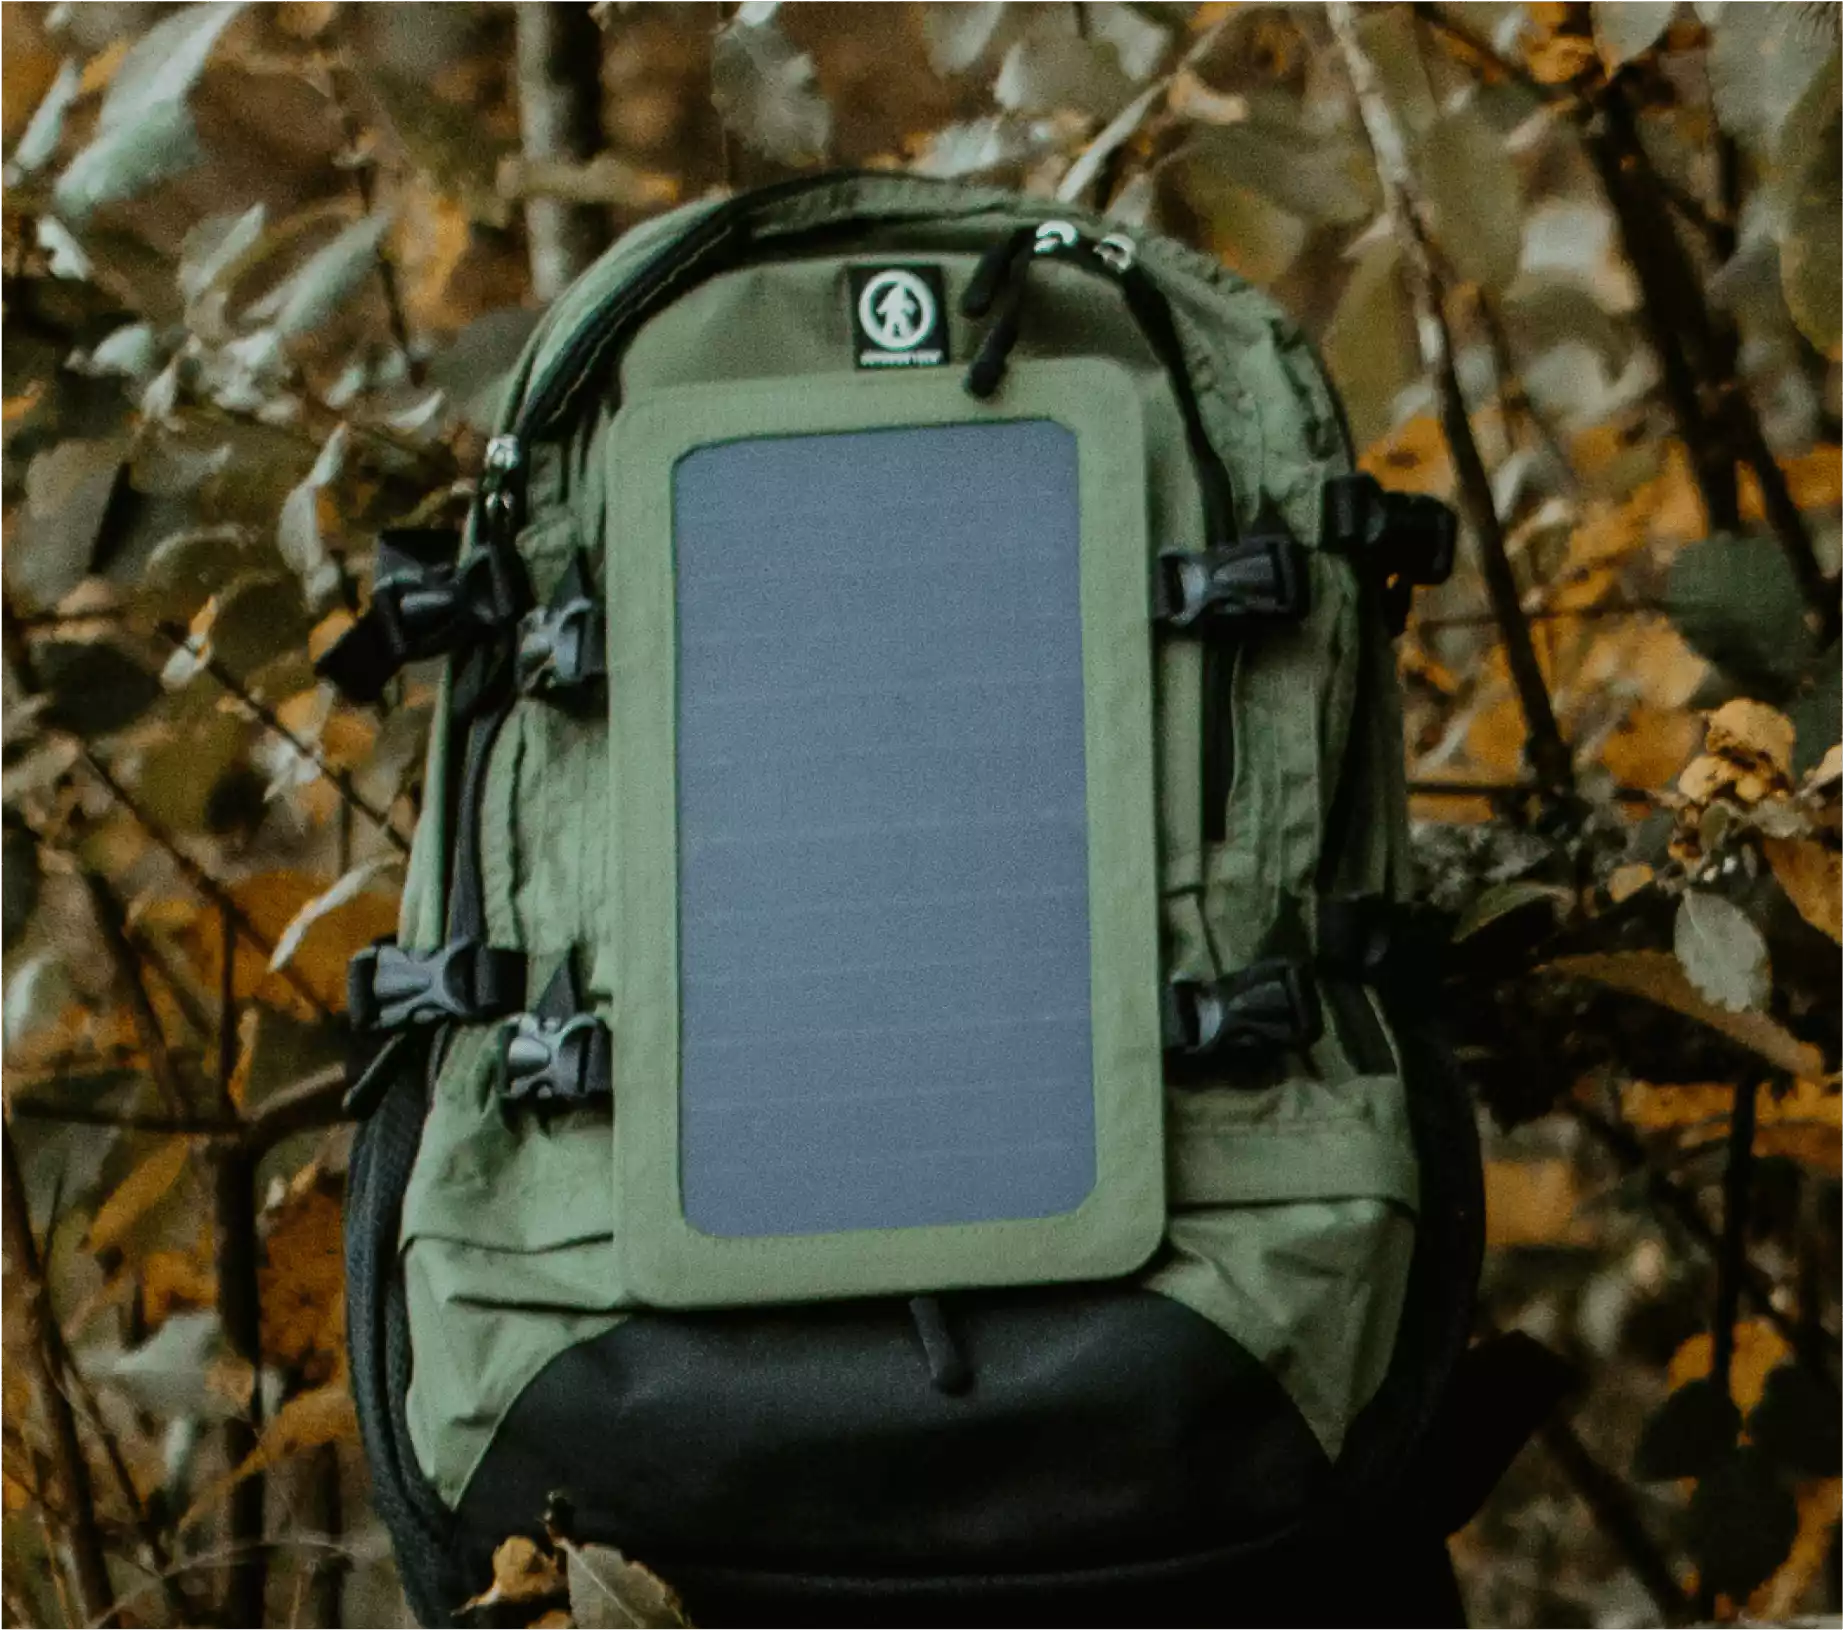 Nomad Solar Backpack